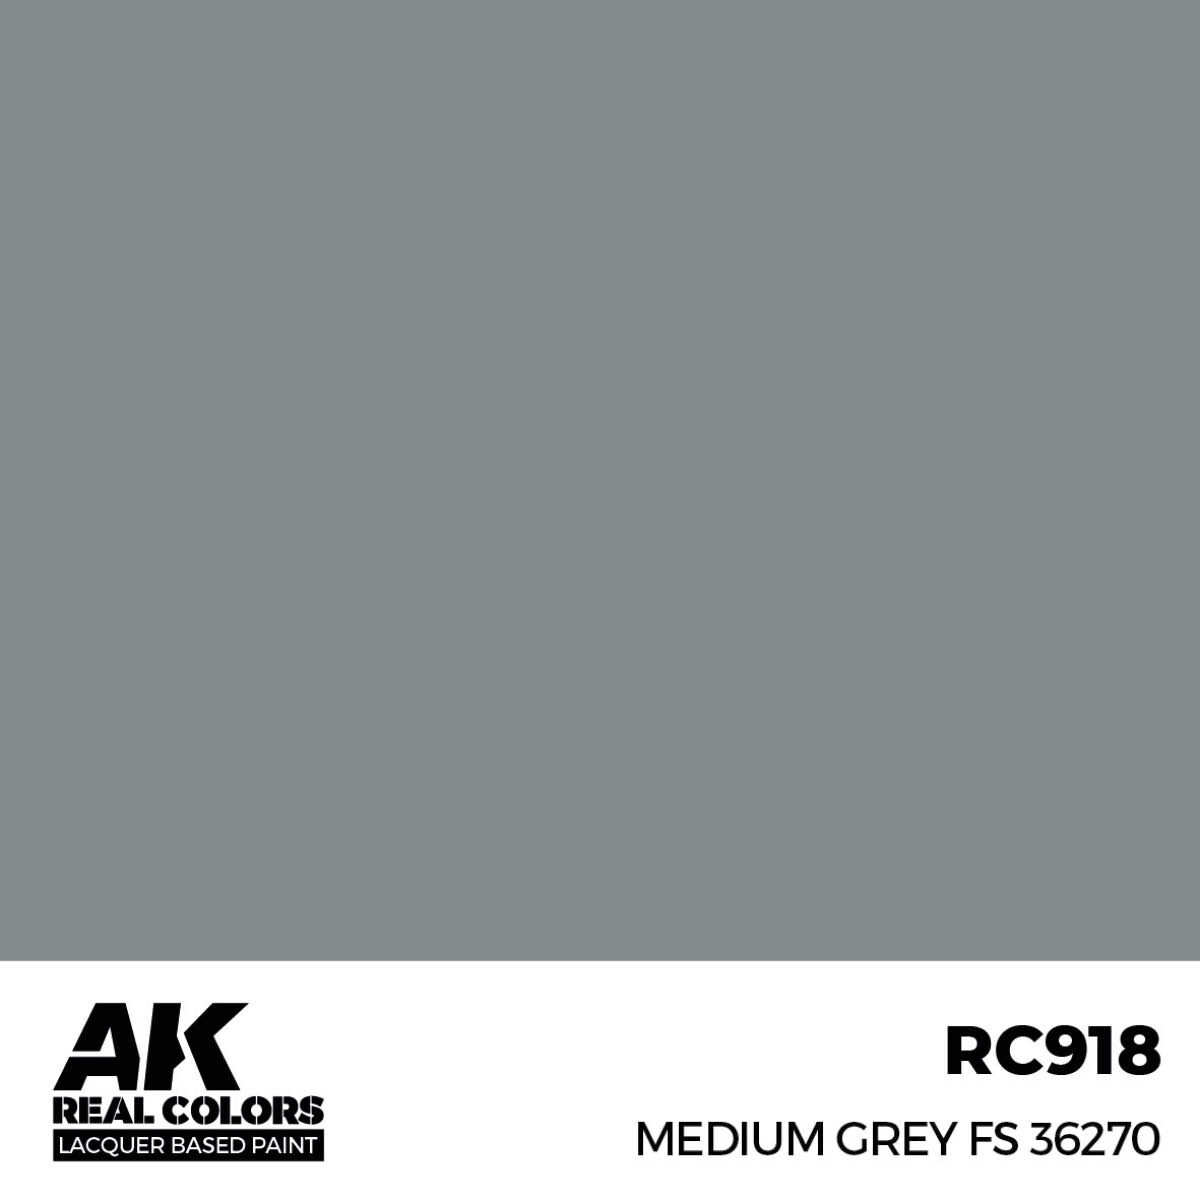 AK RC918 Real Colors Medium Grey FS 36270 17 ml.